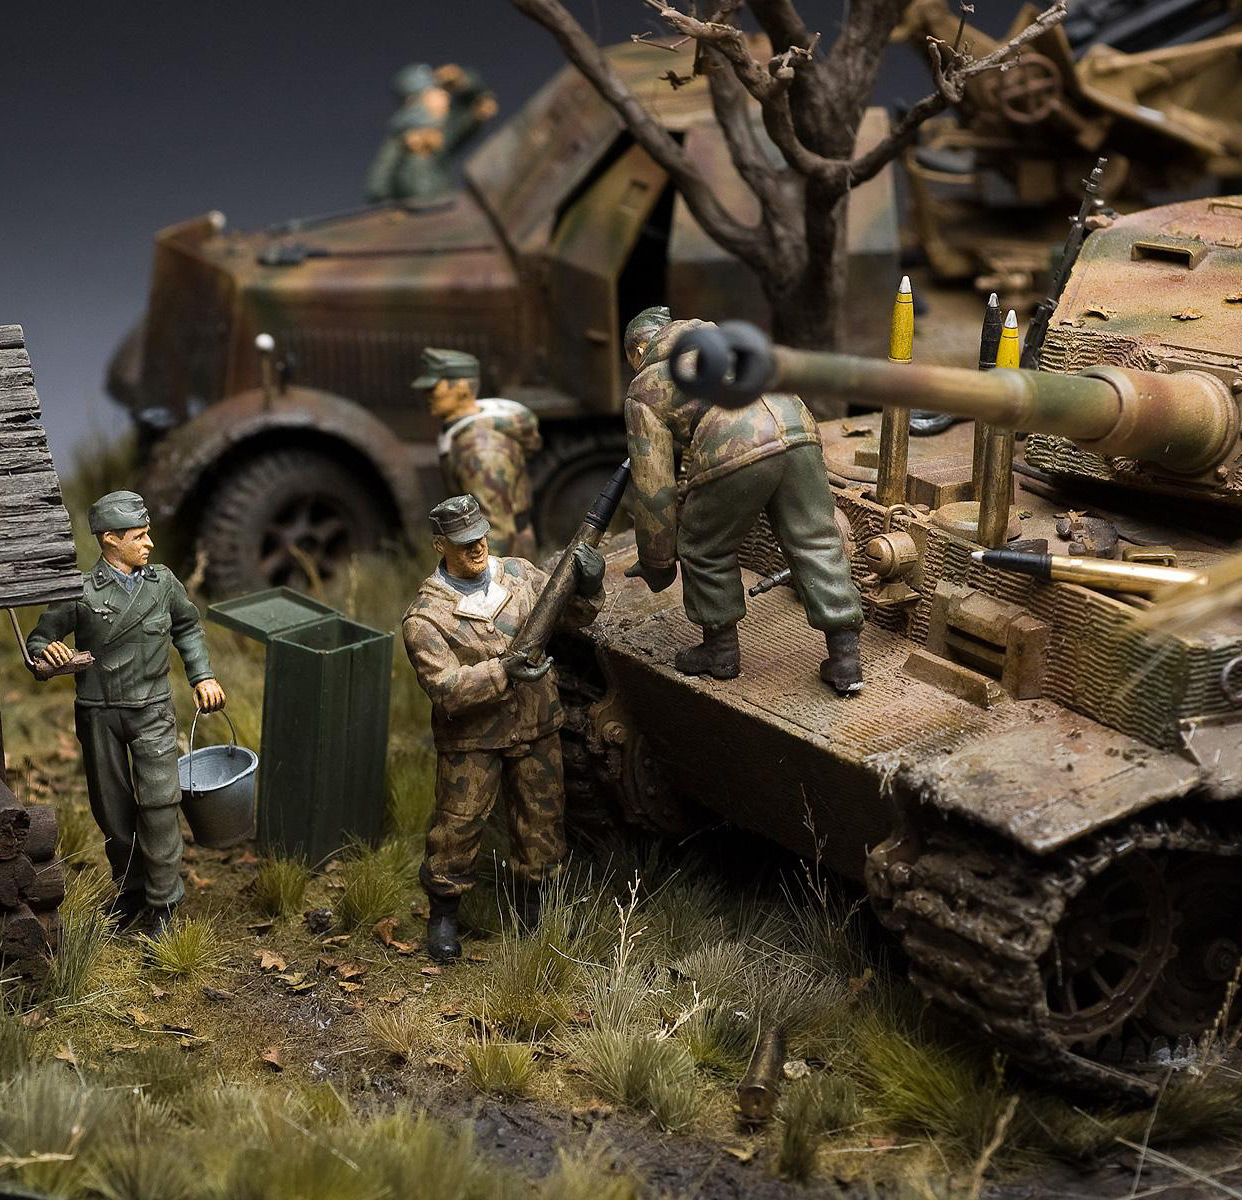 Life-Like Historically Correct WWII Diorama | I Like To Waste My Time